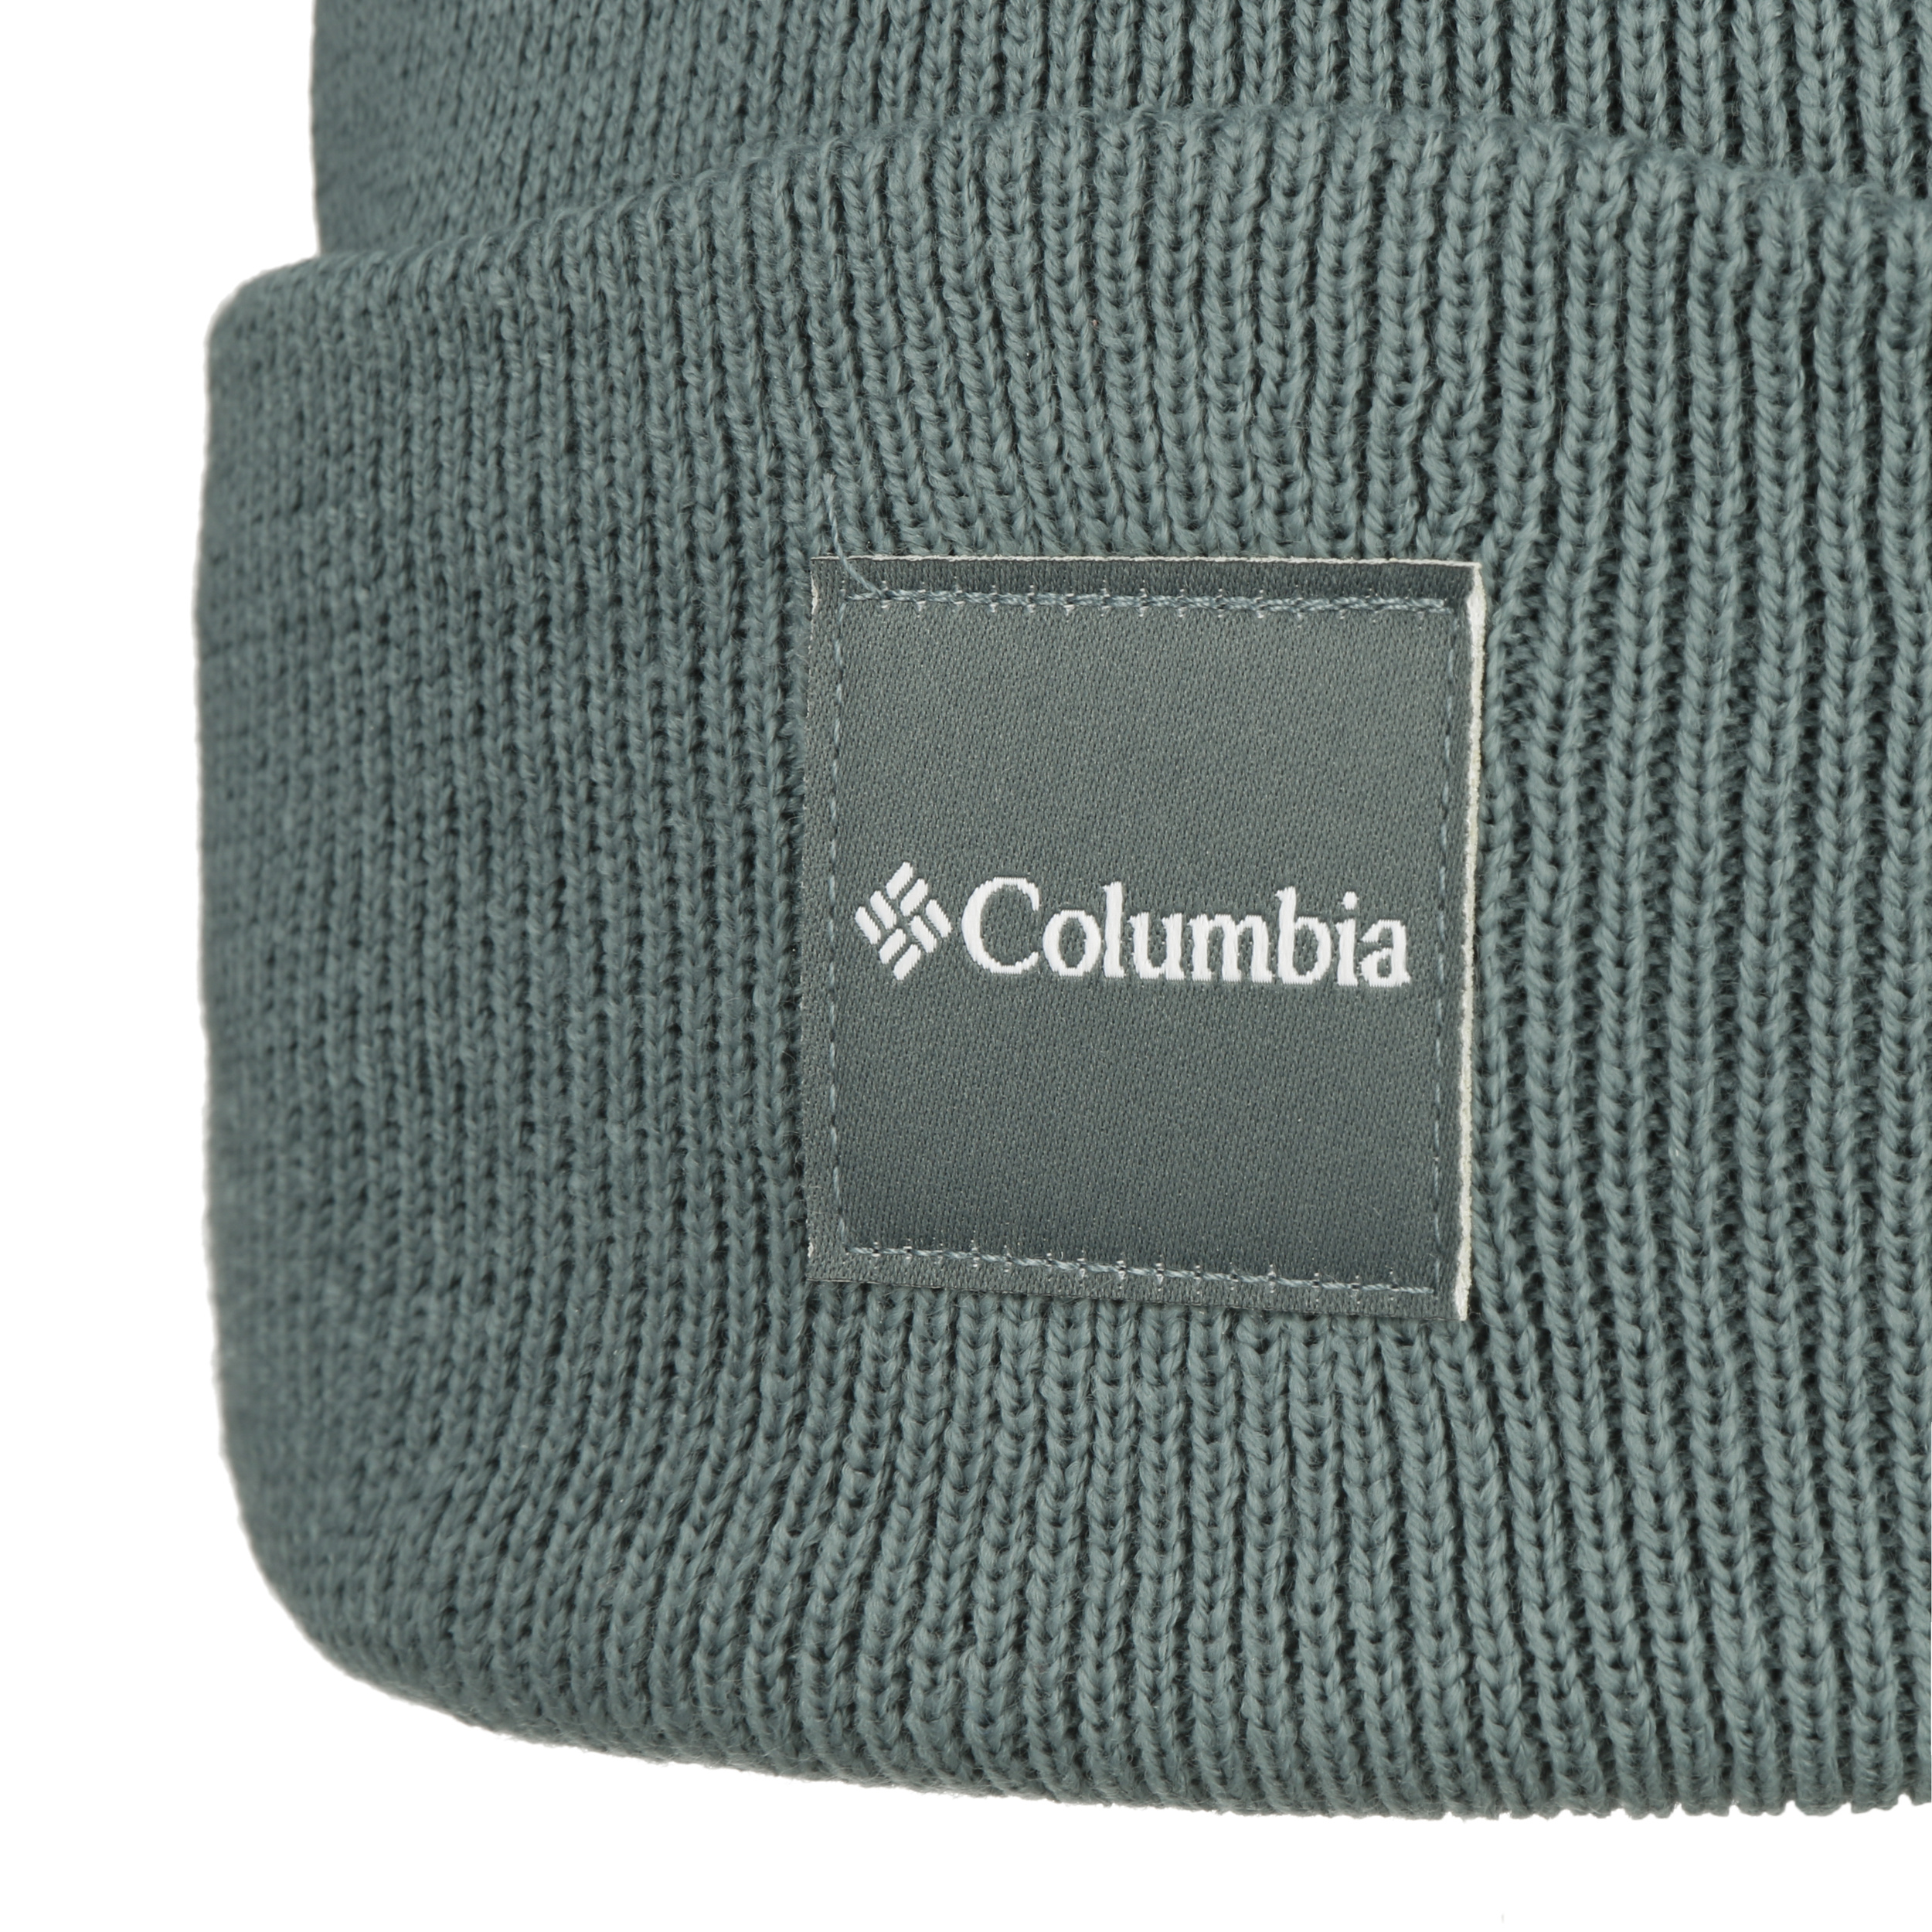 Heavyweight € Trek Beanie Columbia - Hat by City 32,95